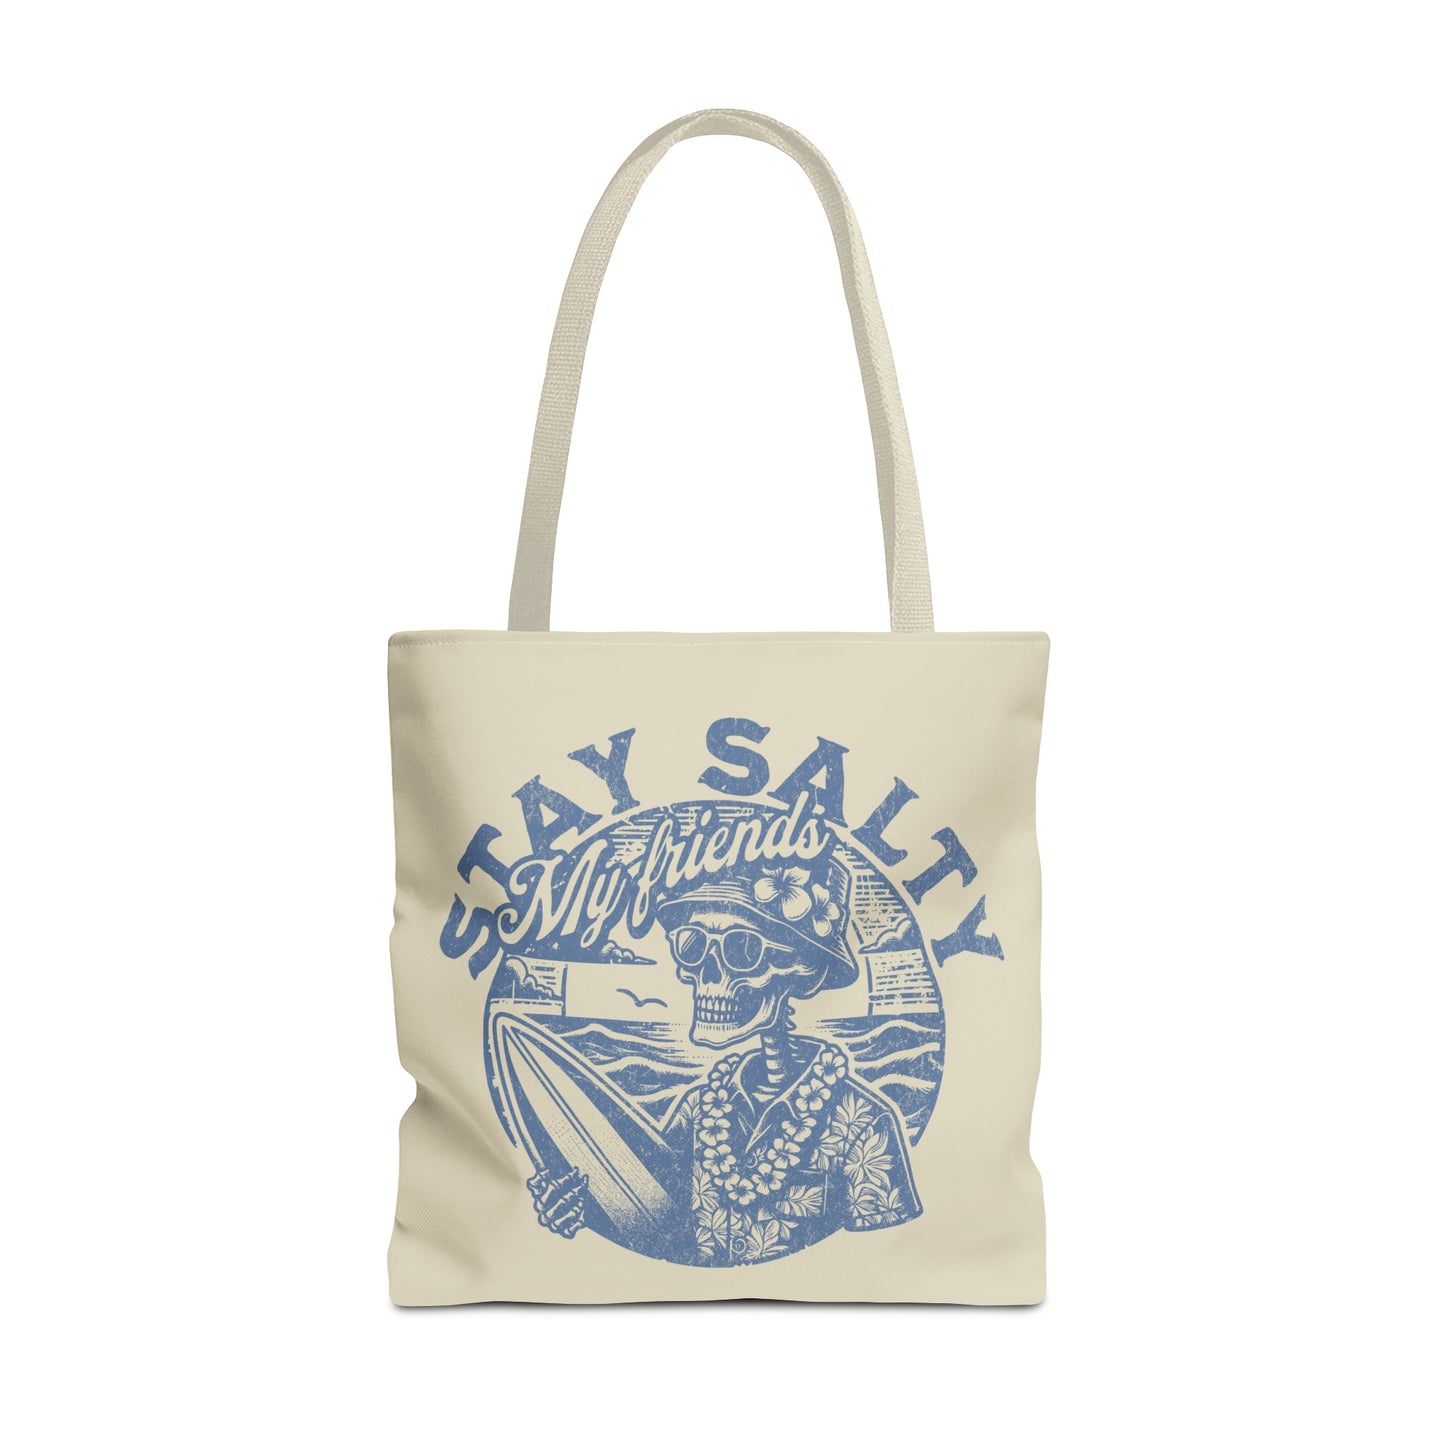 "Stay Salty, My Friends" - Beach Tote Bag